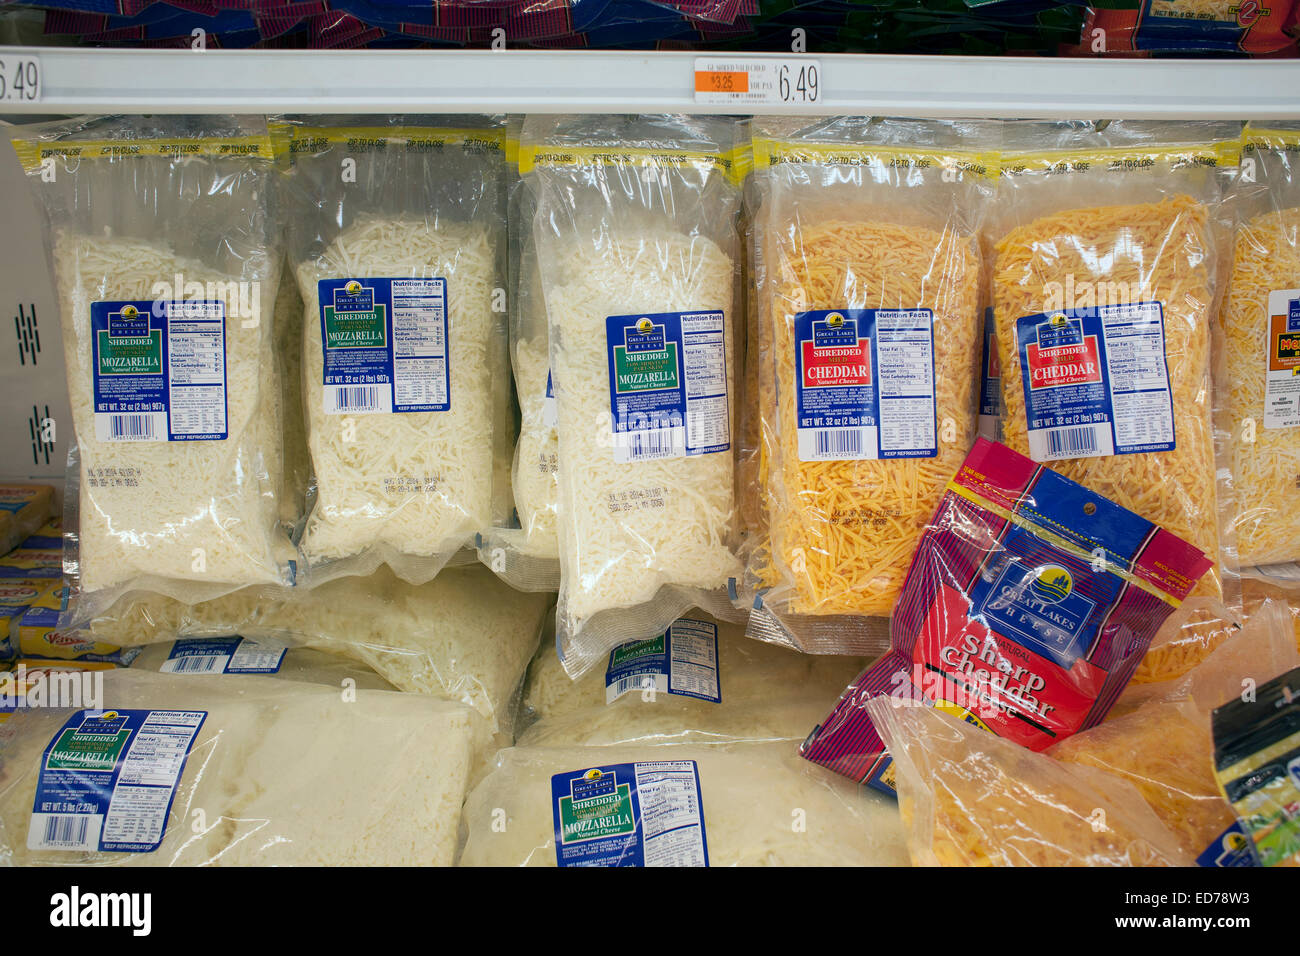 Abschnitt "Käse" am Preis Ritus, ein großer Supermarkt in Pittsfield, Massachusetts. Stockfoto